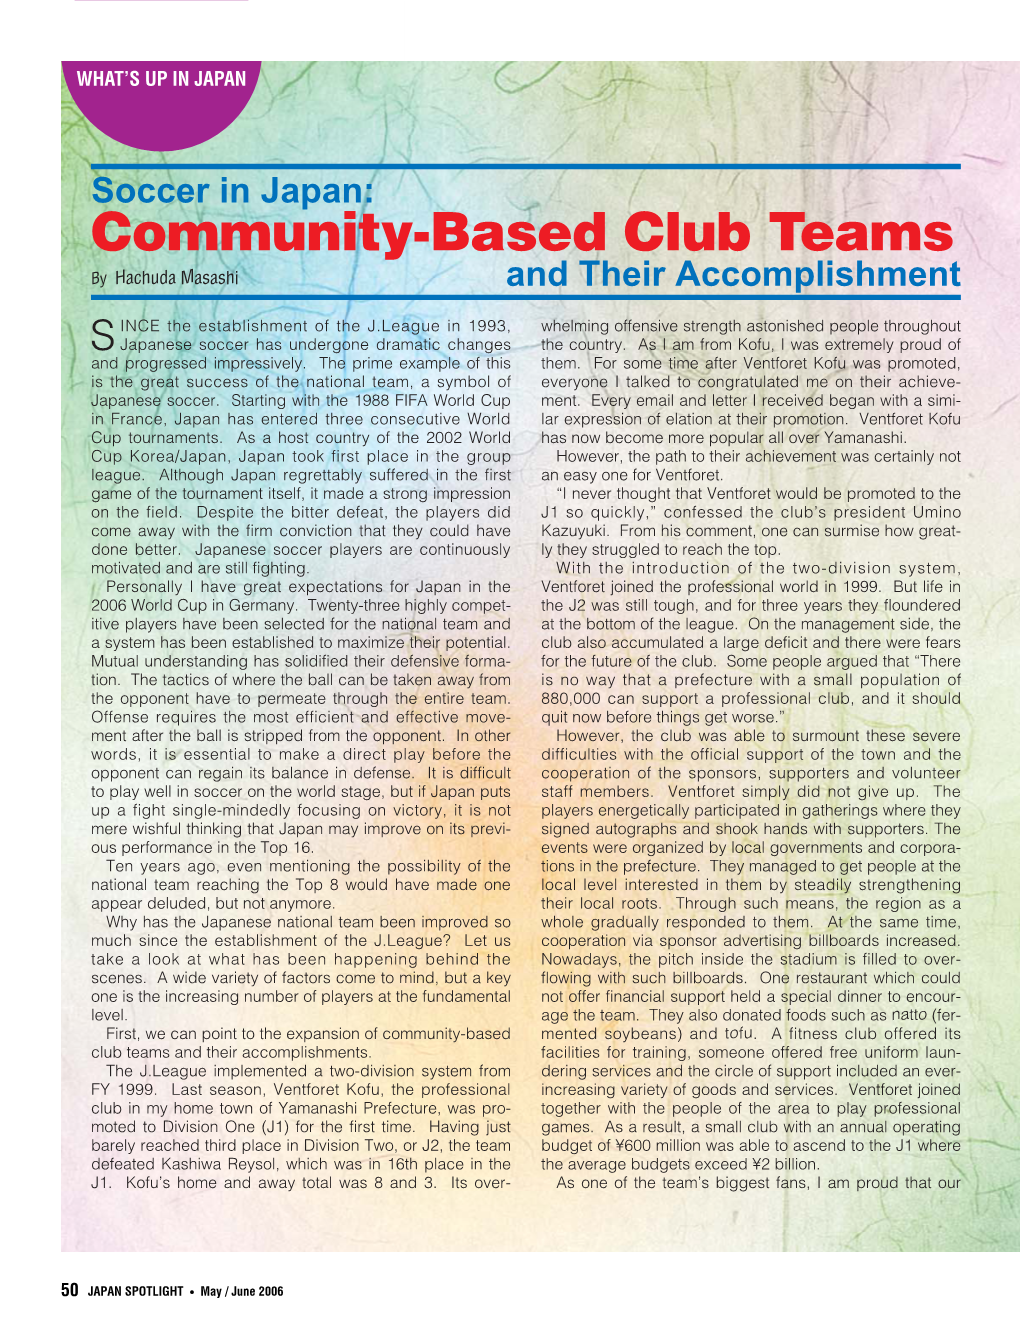 Community-Based Club Teams by Hachuda Masashi and Their Accomplishment